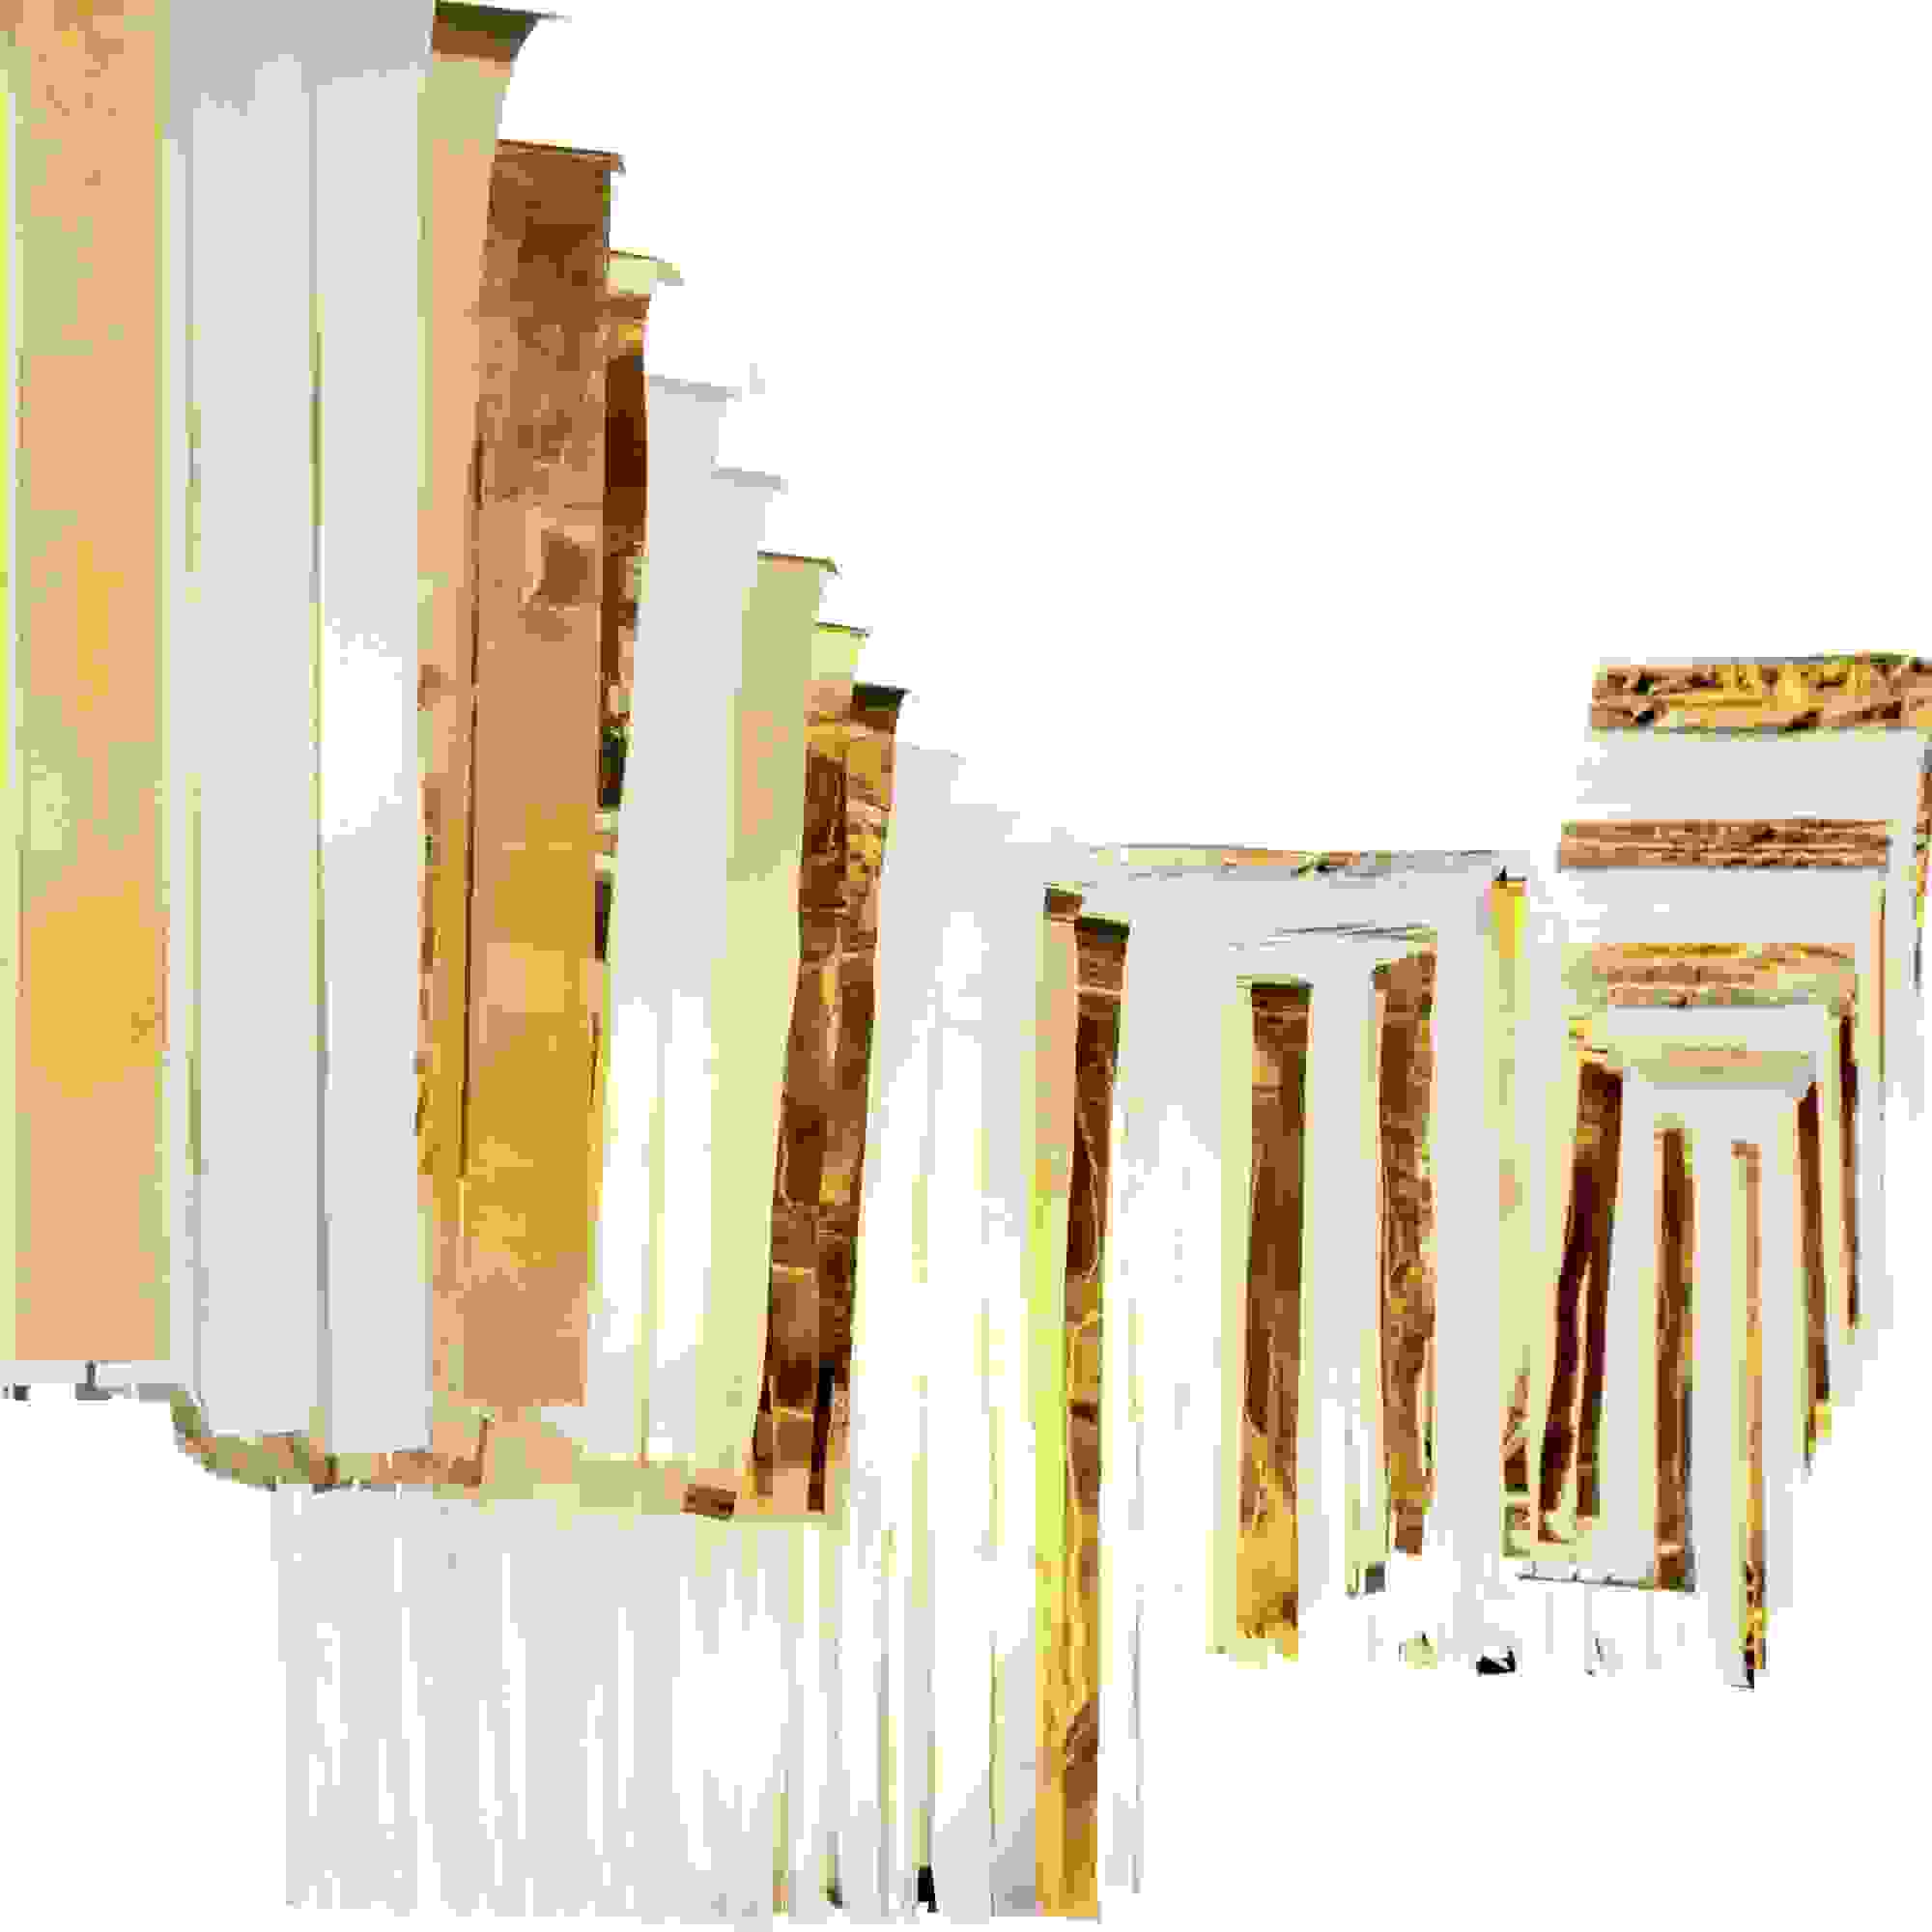 Gold & White Accordion Fringe Foil Tissue Ceiling Decoration, 12ft